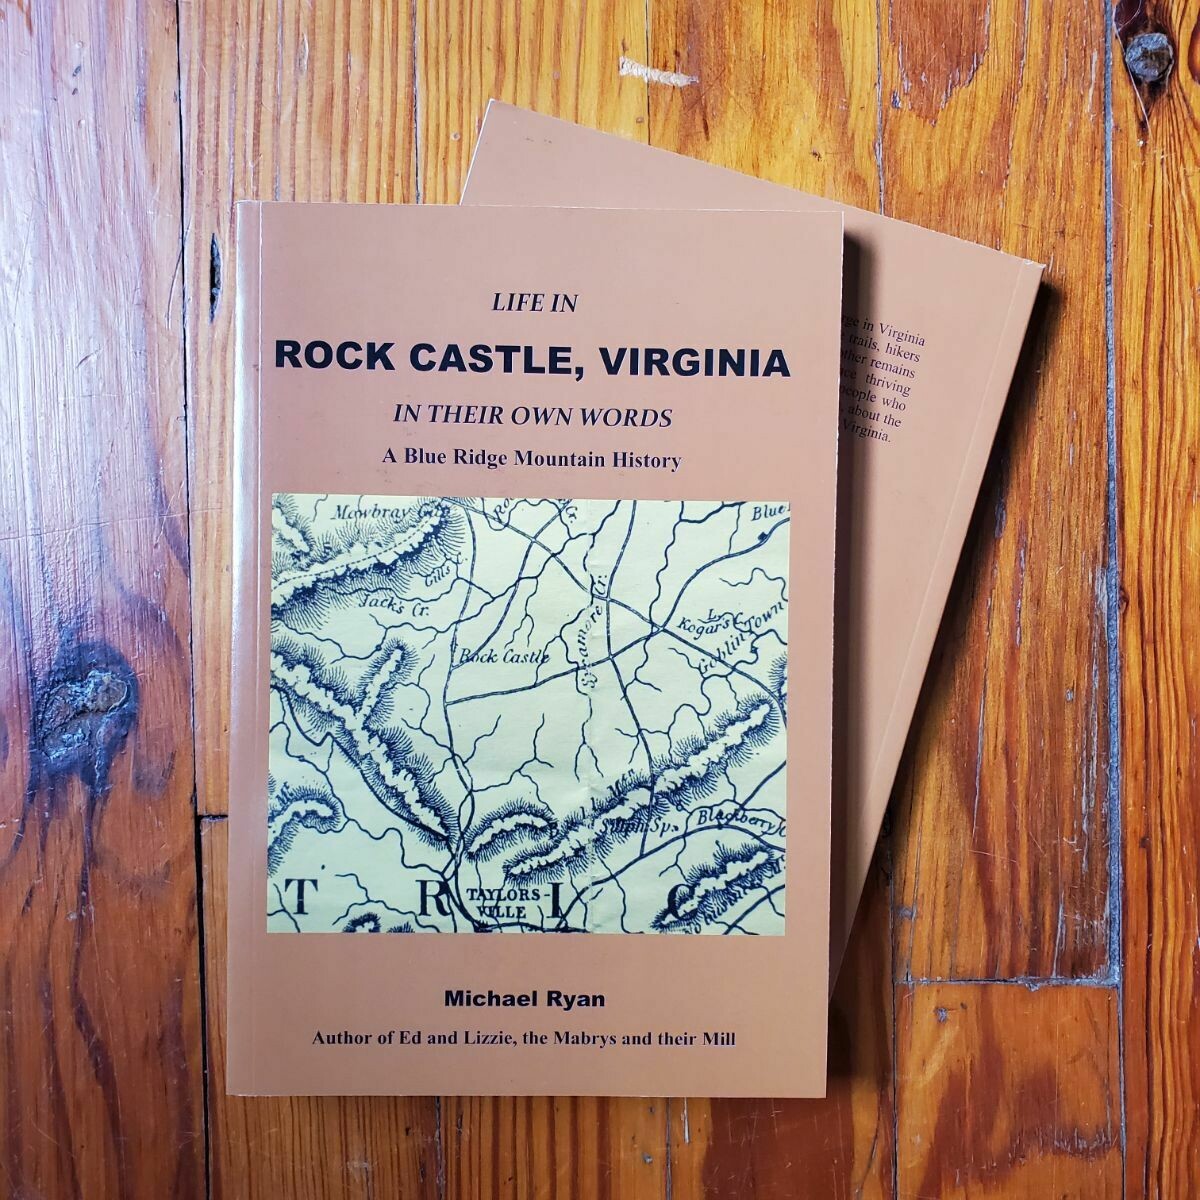 Rock Castle, Virginia by: Michael Ryan